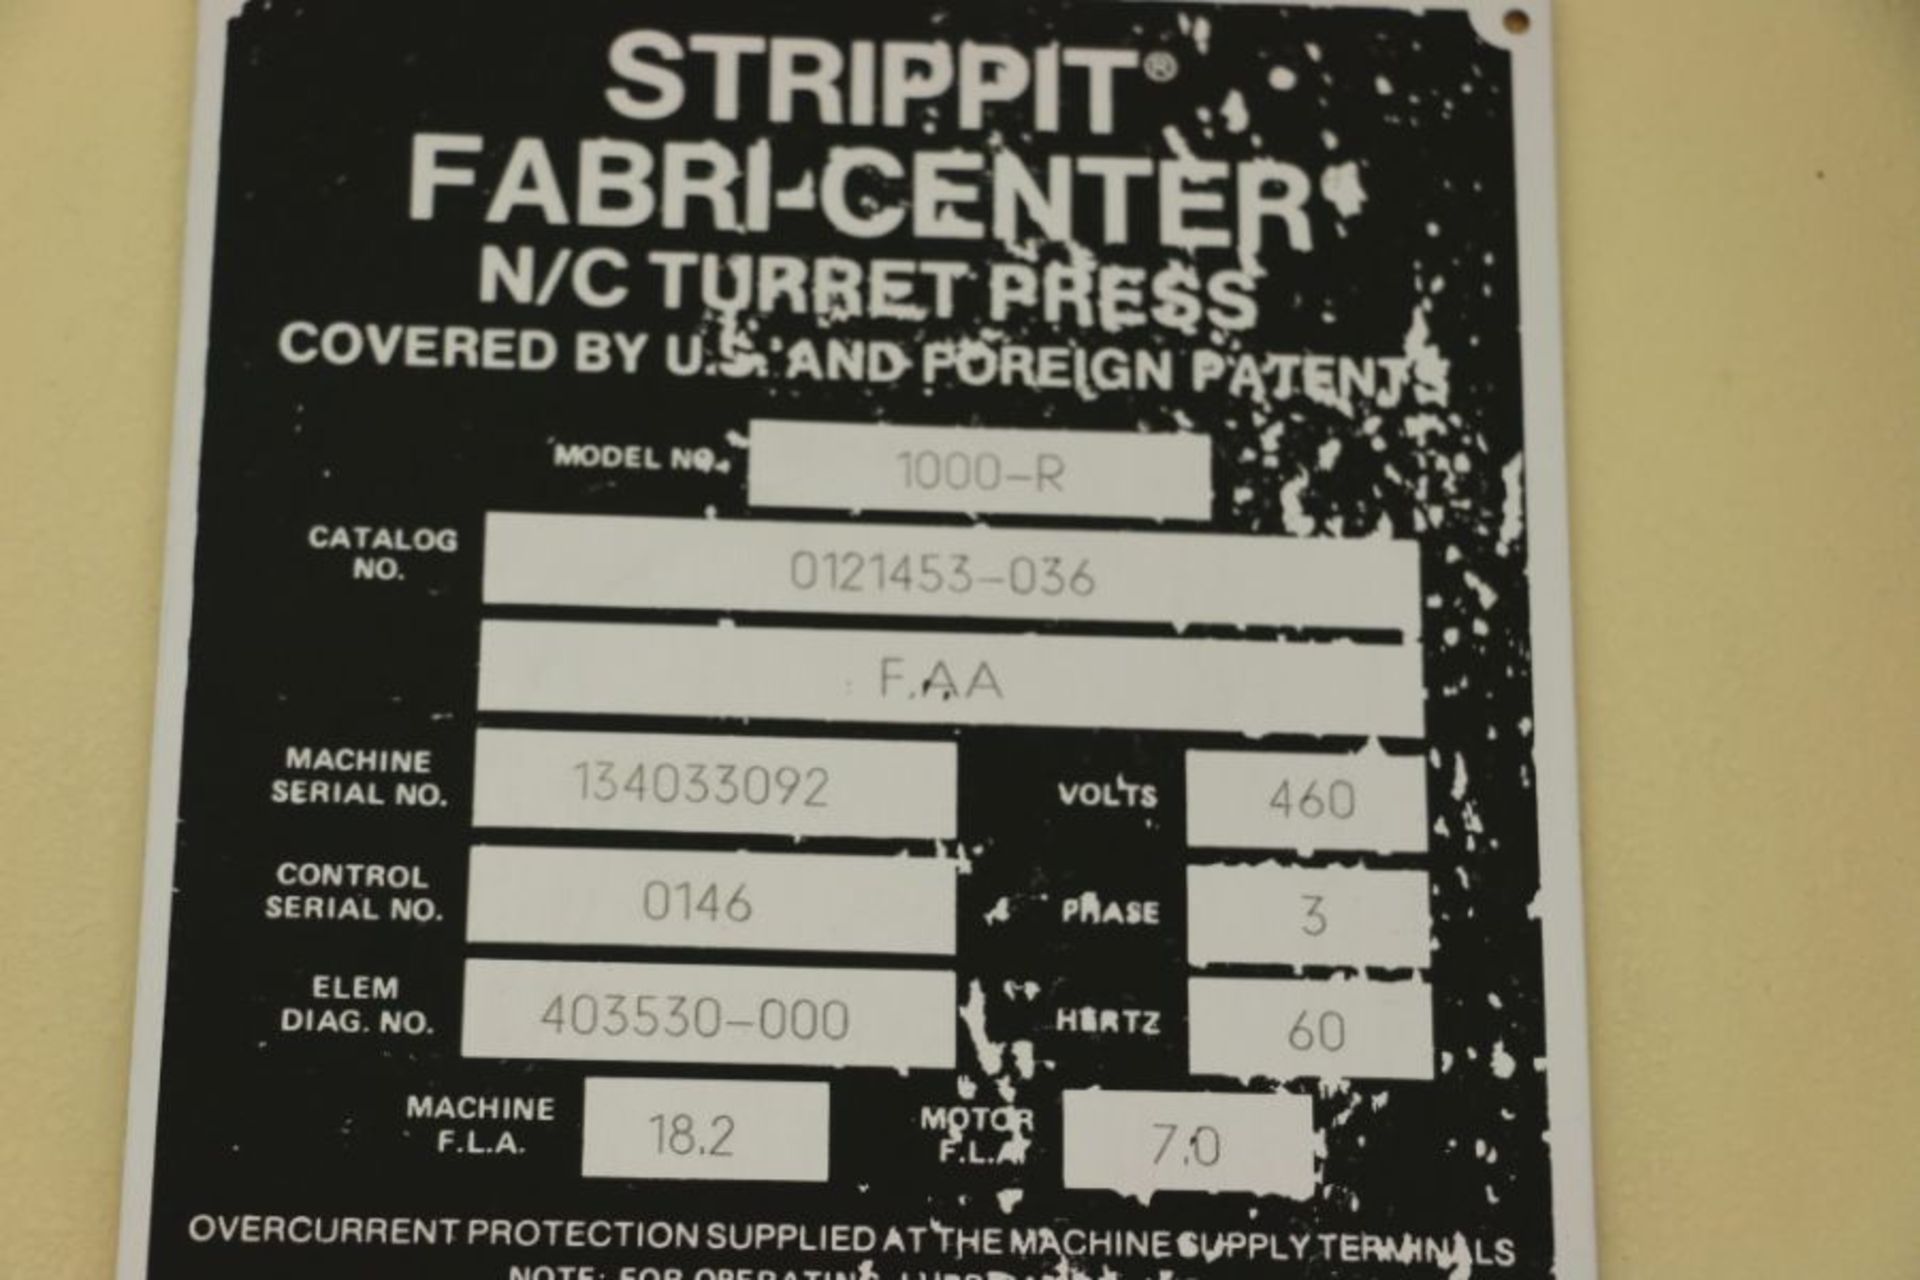 Strippit Fabri-Center 1000R CNC Turret Punch, 20 Station, s/n 134033092 - Image 8 of 8